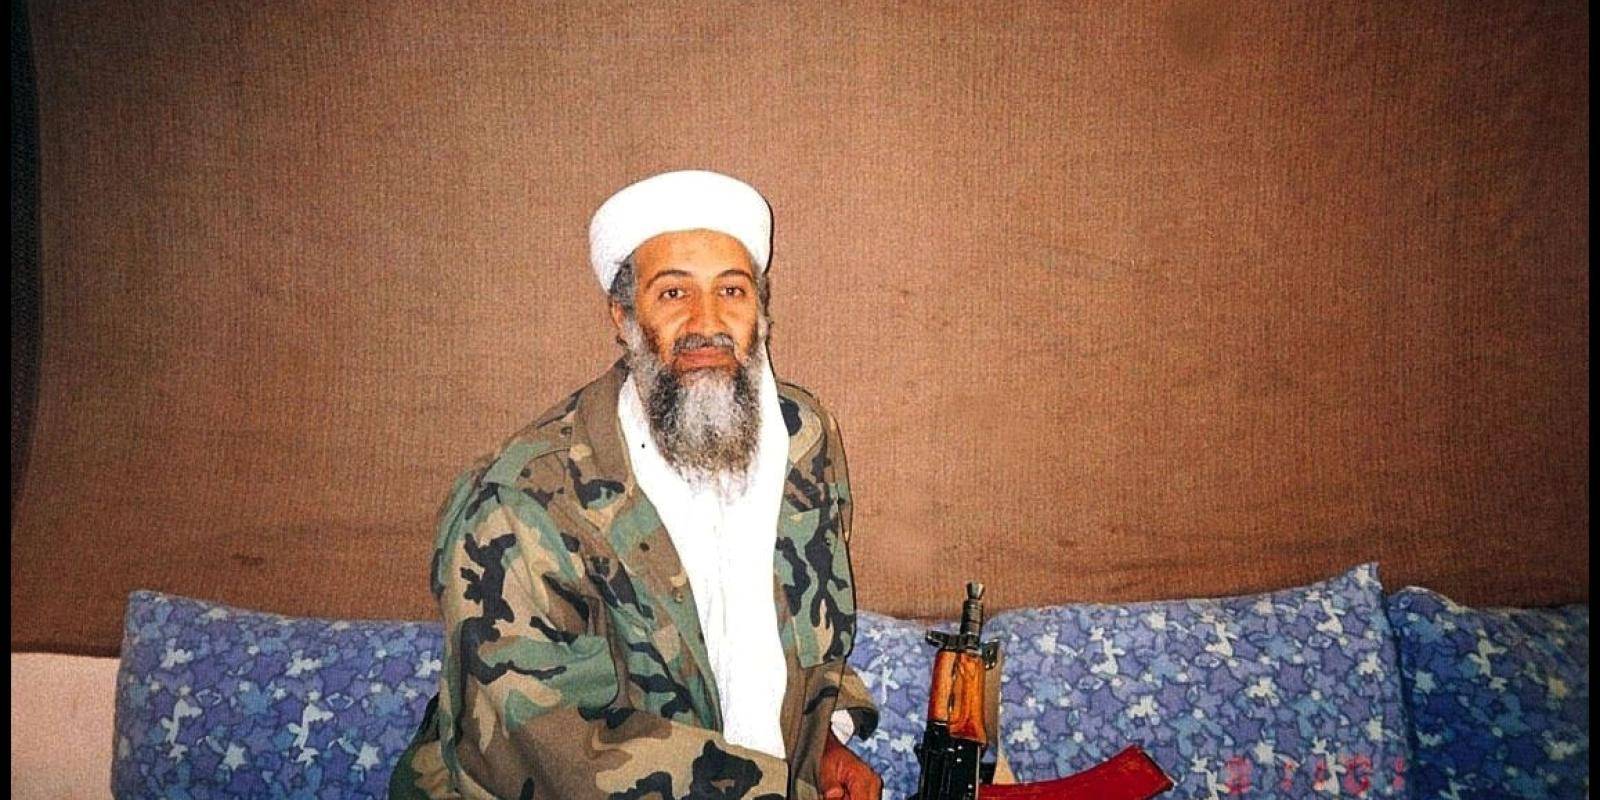 Watch Bin Laden: The Road to 9/11